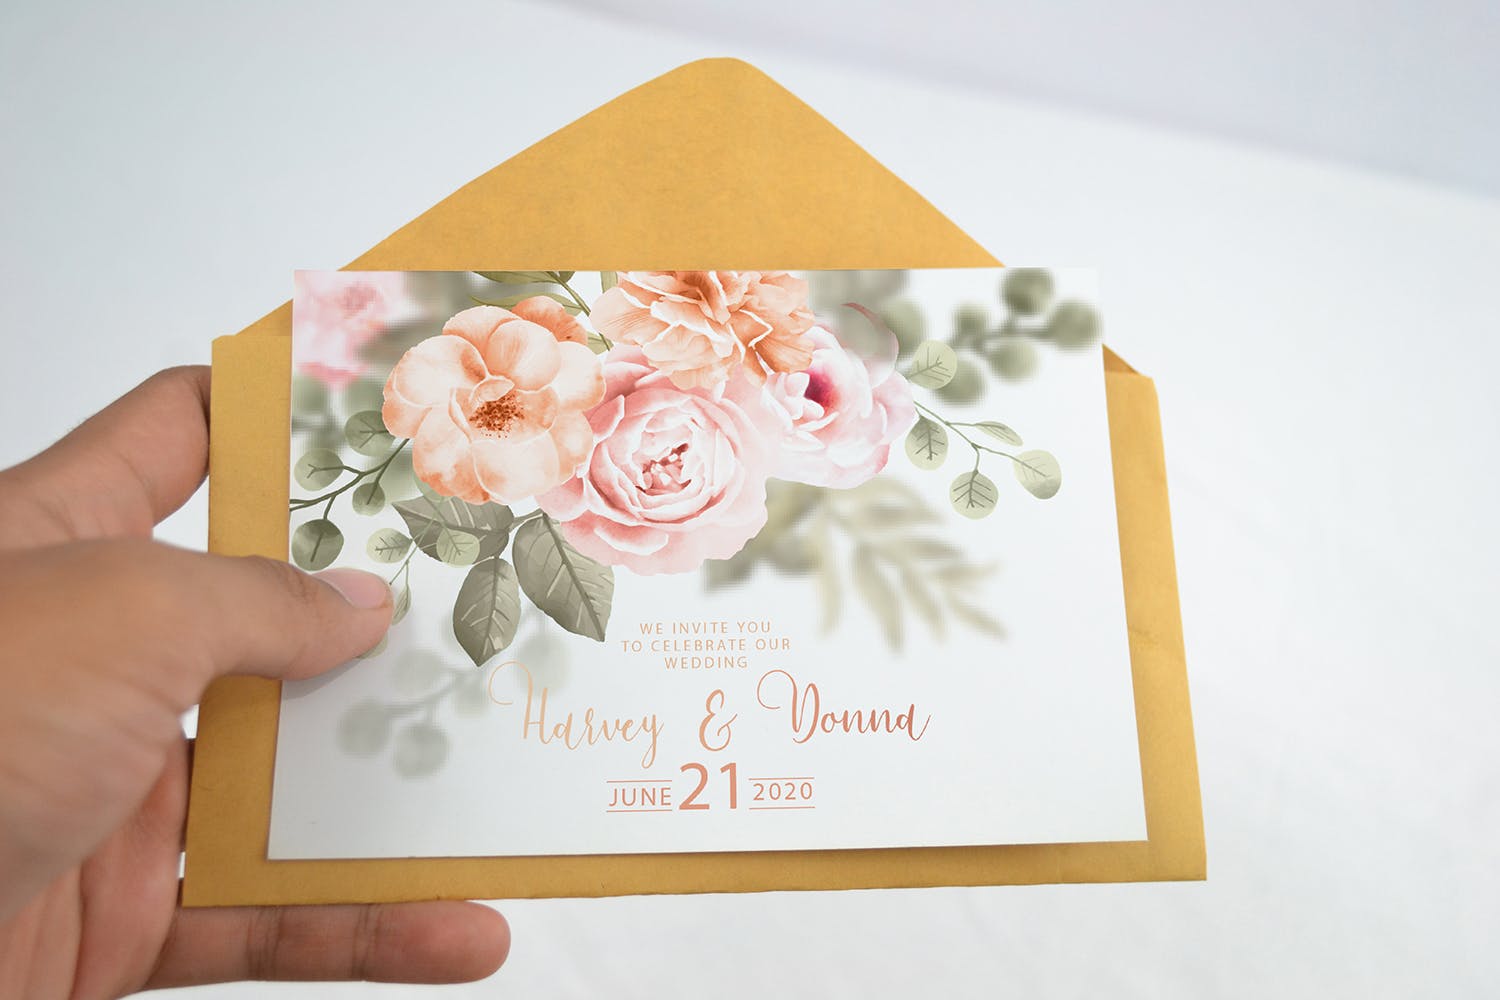 婚礼邀请函设计效果图样机第一素材精选模板v2 Realistic Wedding Invitation Card Mockup V2插图(1)